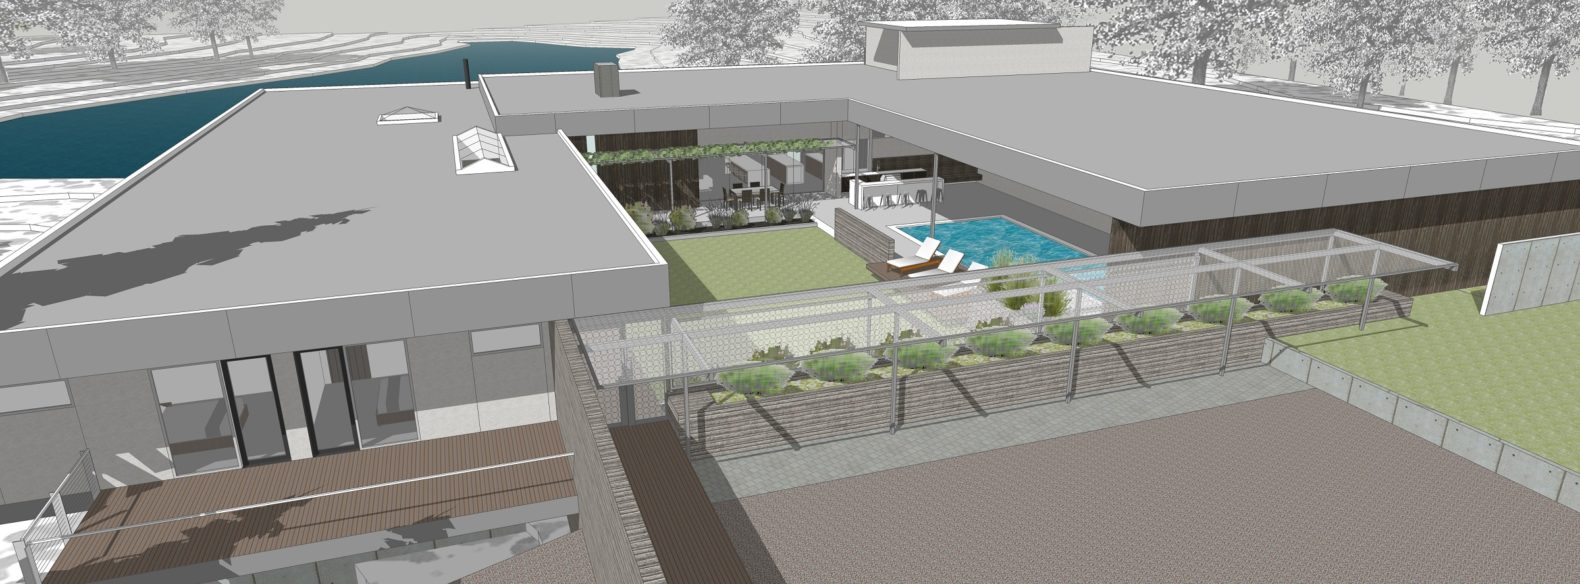 modern courtyard pool